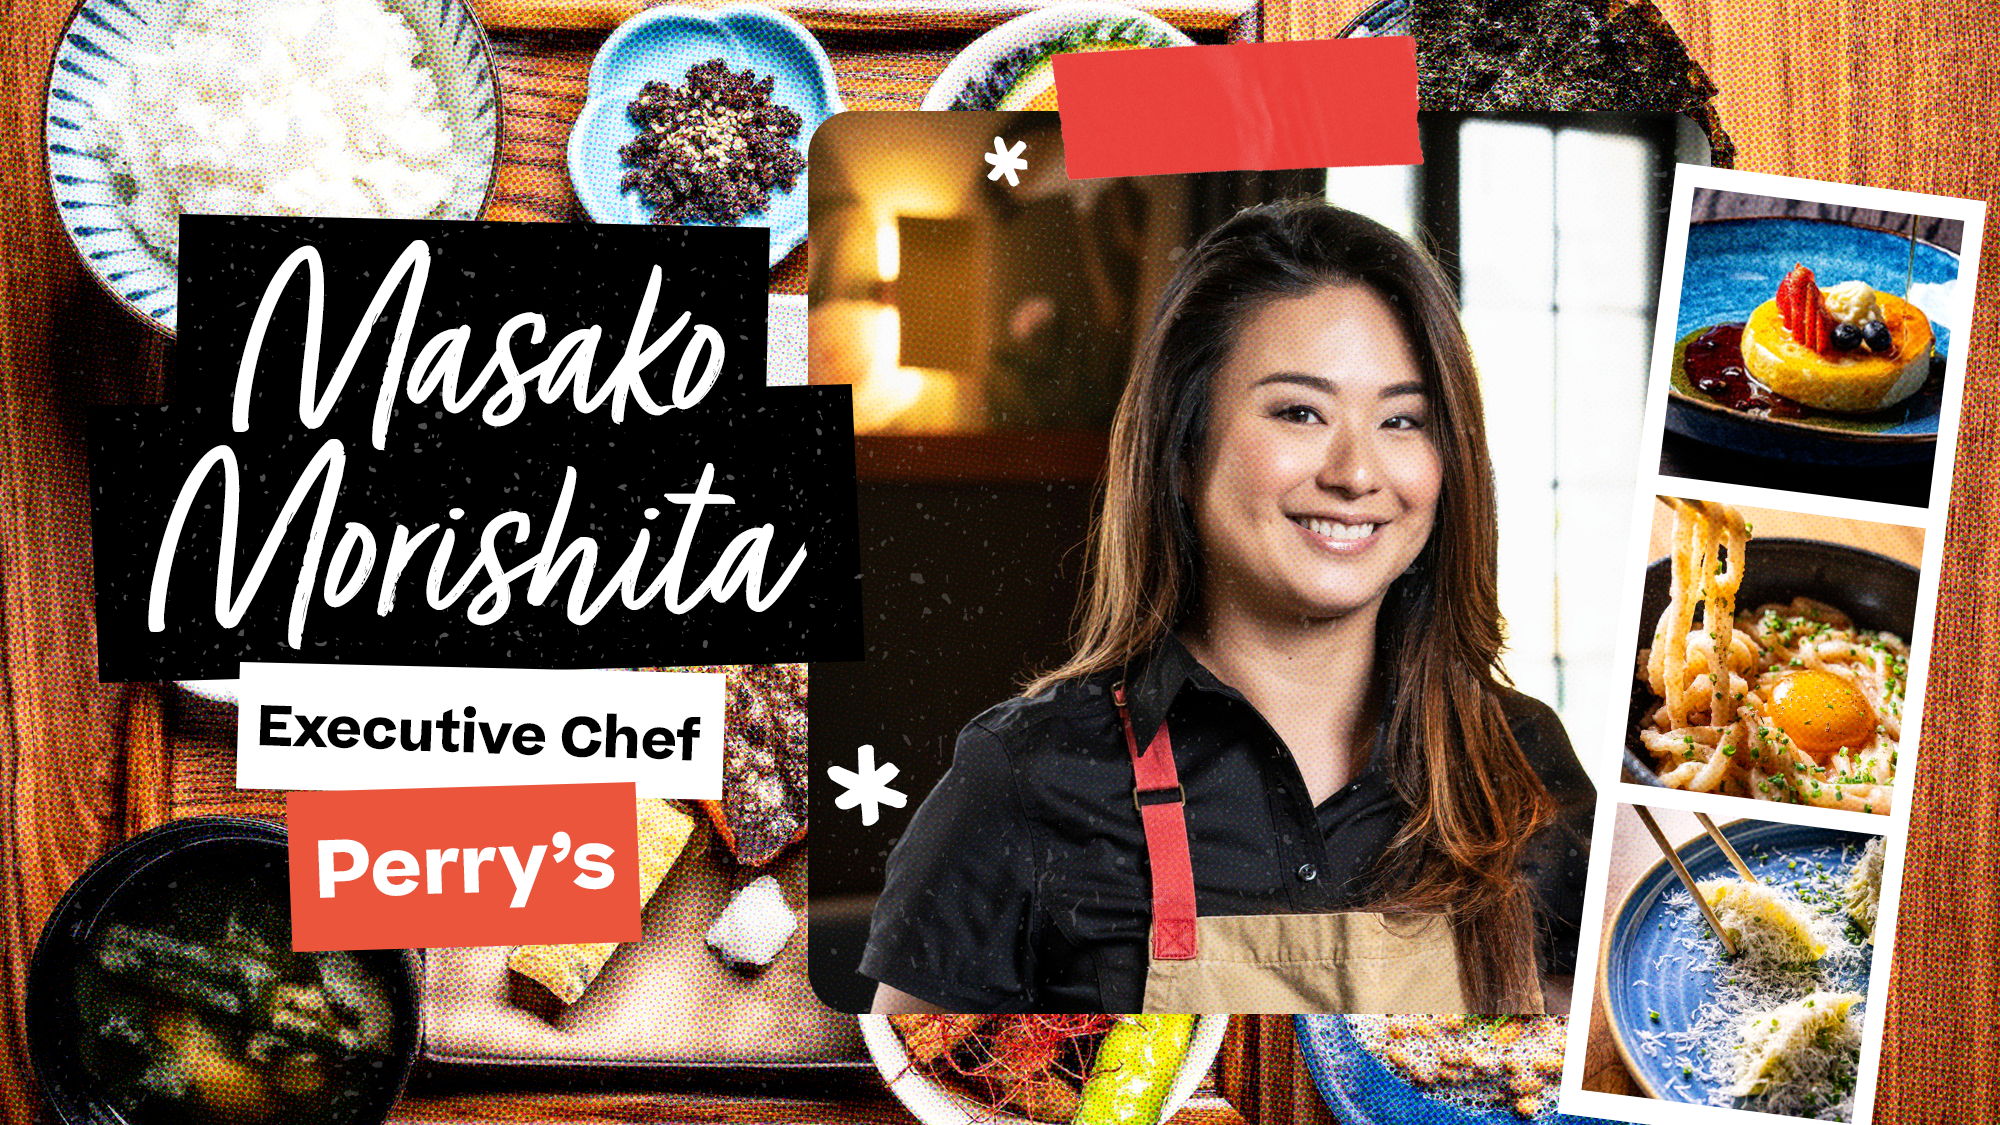 Perry's executive chef Masako Morishita